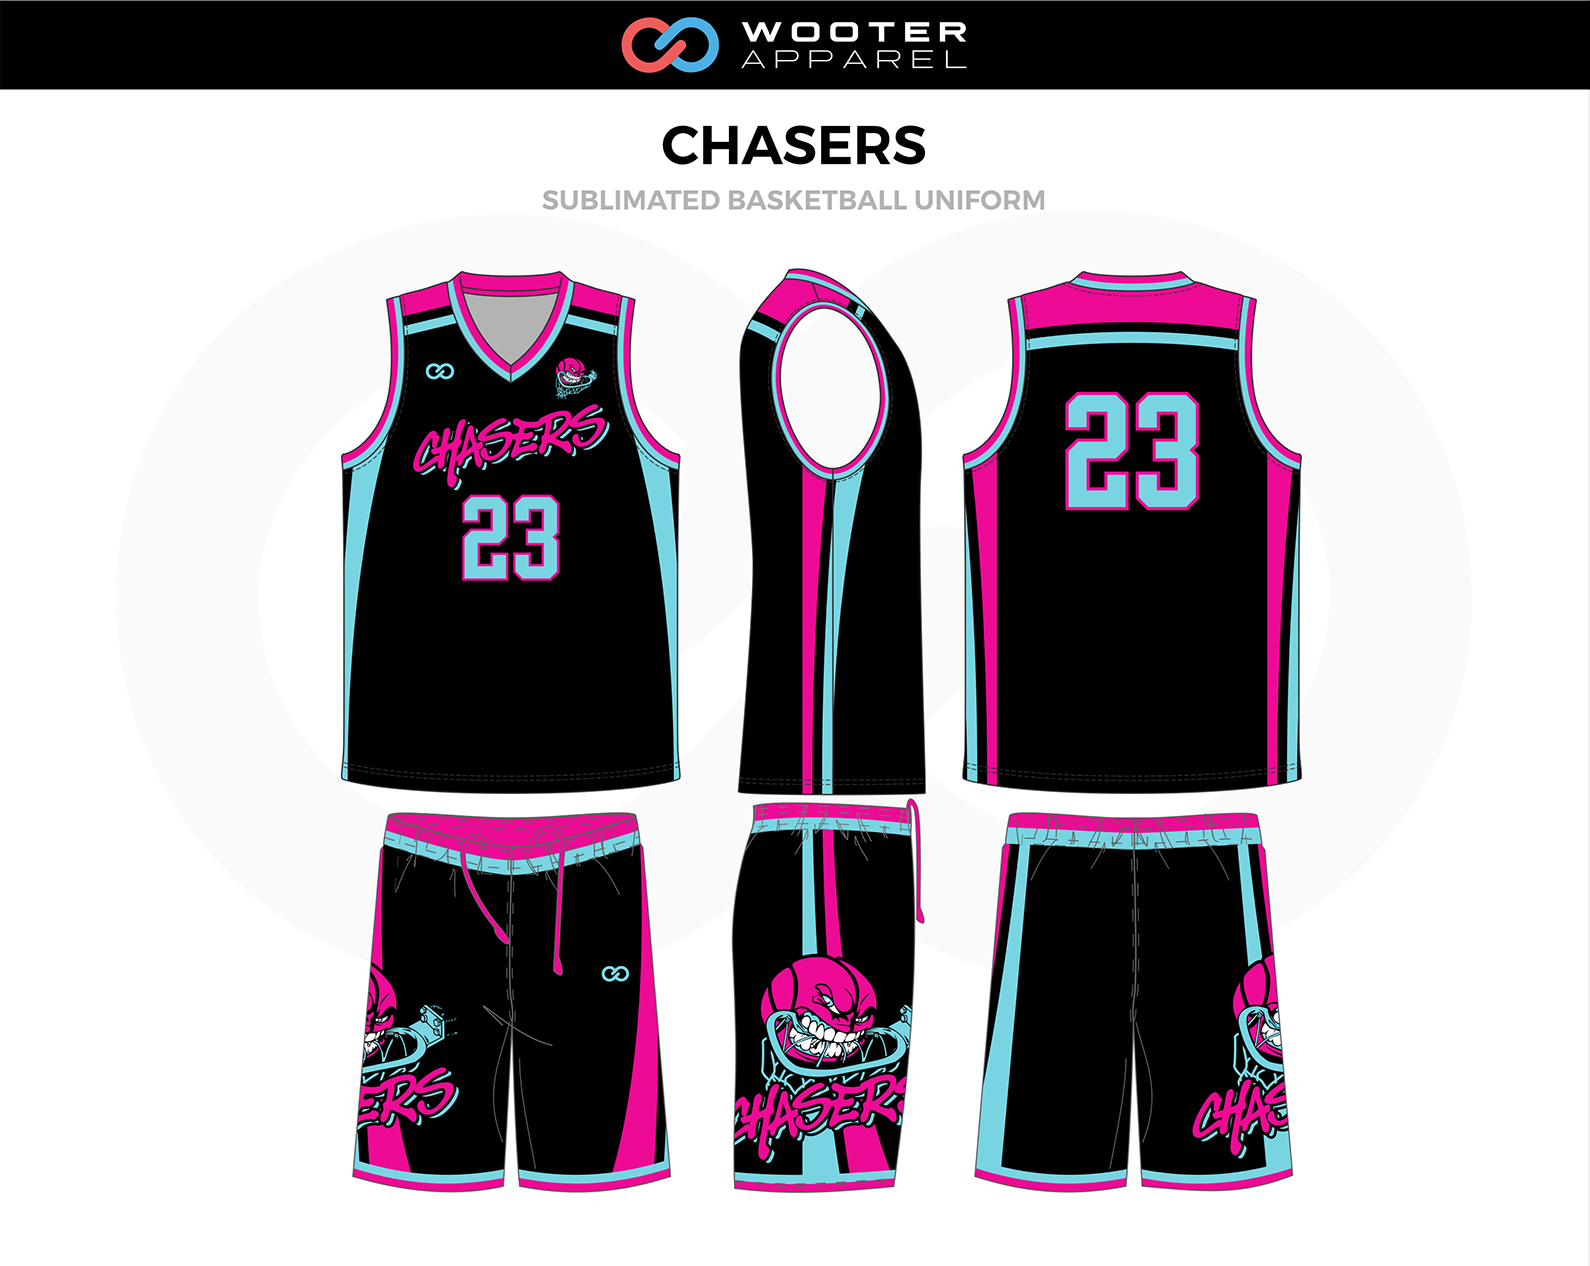 Custom Youth Basketball Jerseys & Custom Basketball Uniforms